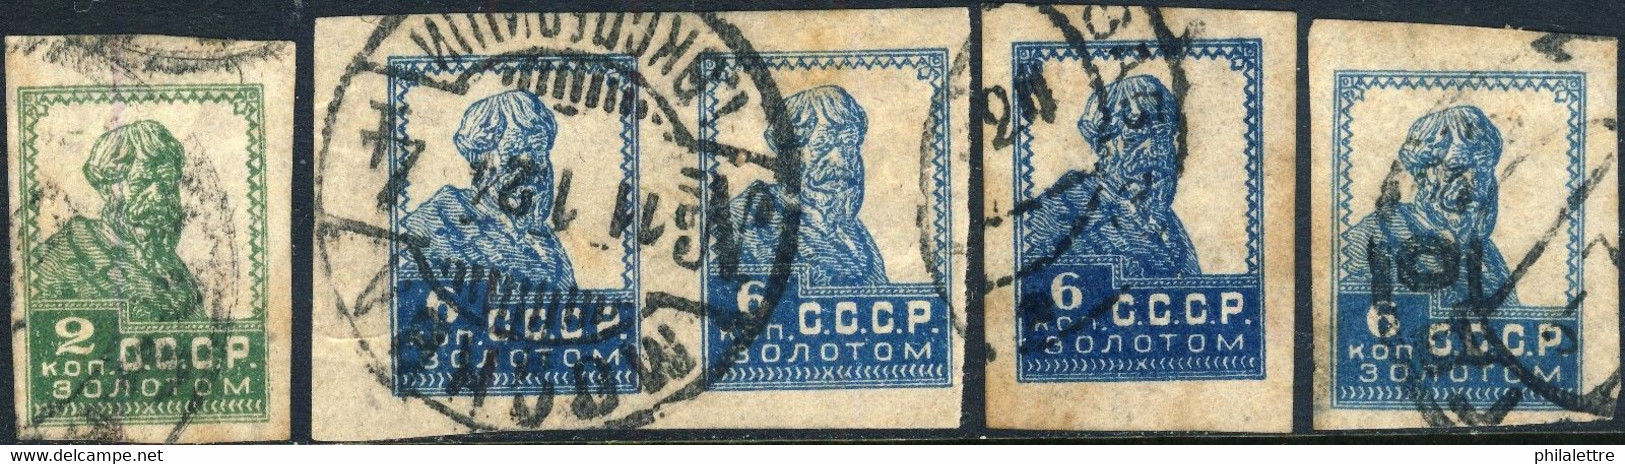 URSS / USSR - Soviet Union - 1923/4 - Mi.229.1 & 4xMi.233.I Imperf / No Wmk - VFU - Oblitérés